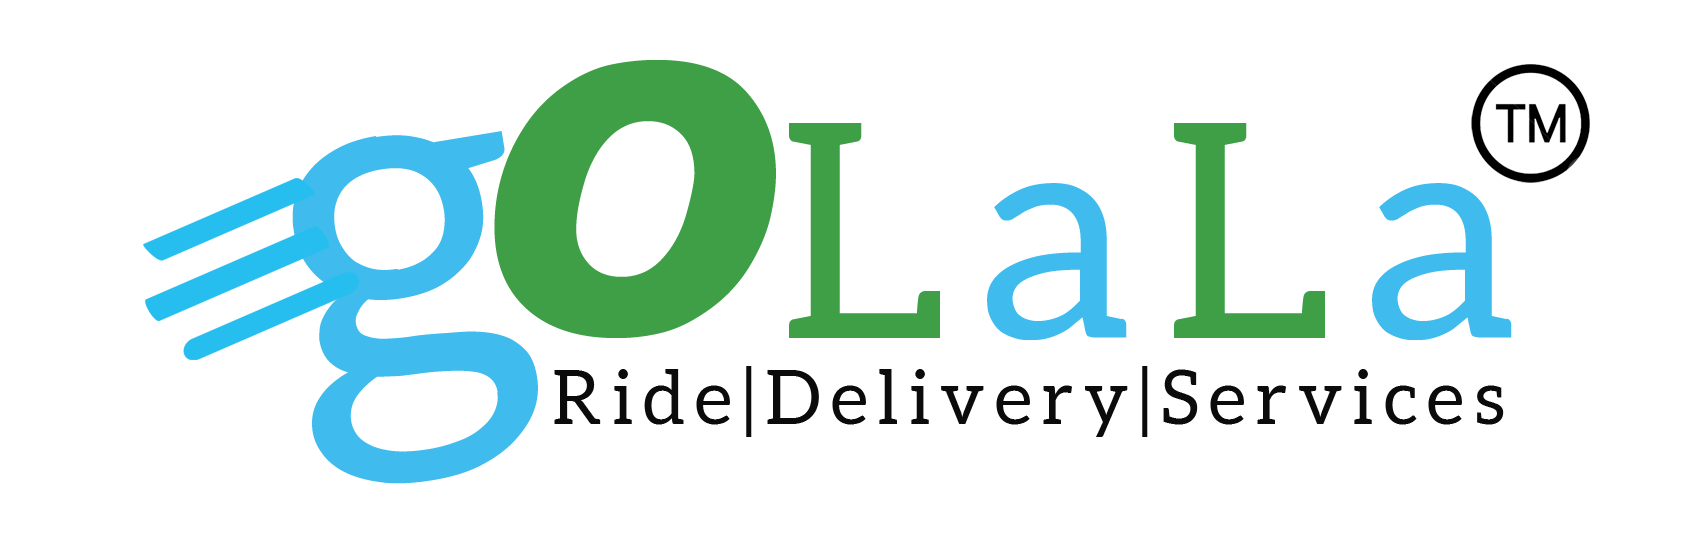 Golala logo